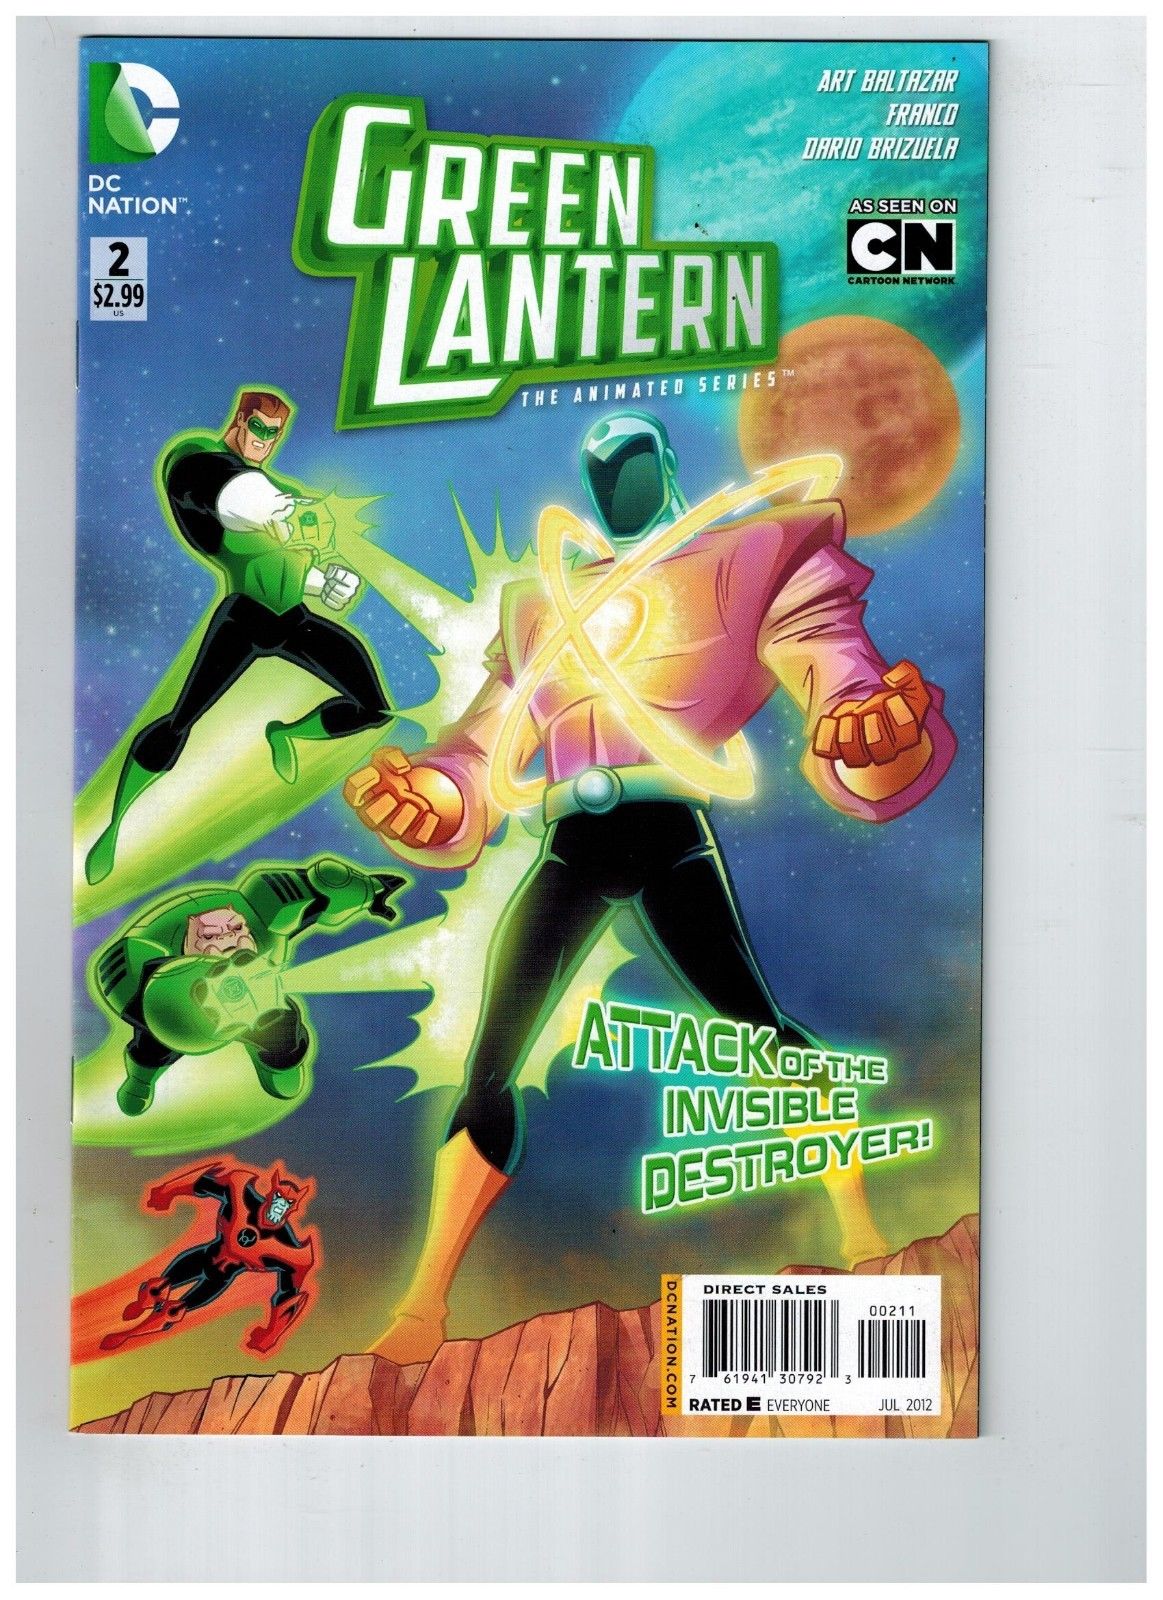 Green Lantern The Animated Series # 2 DC Nation Animated TV Cartoon Series  S78 | Comic Books - Modern Age, Green Lantern, Superhero / HipComic